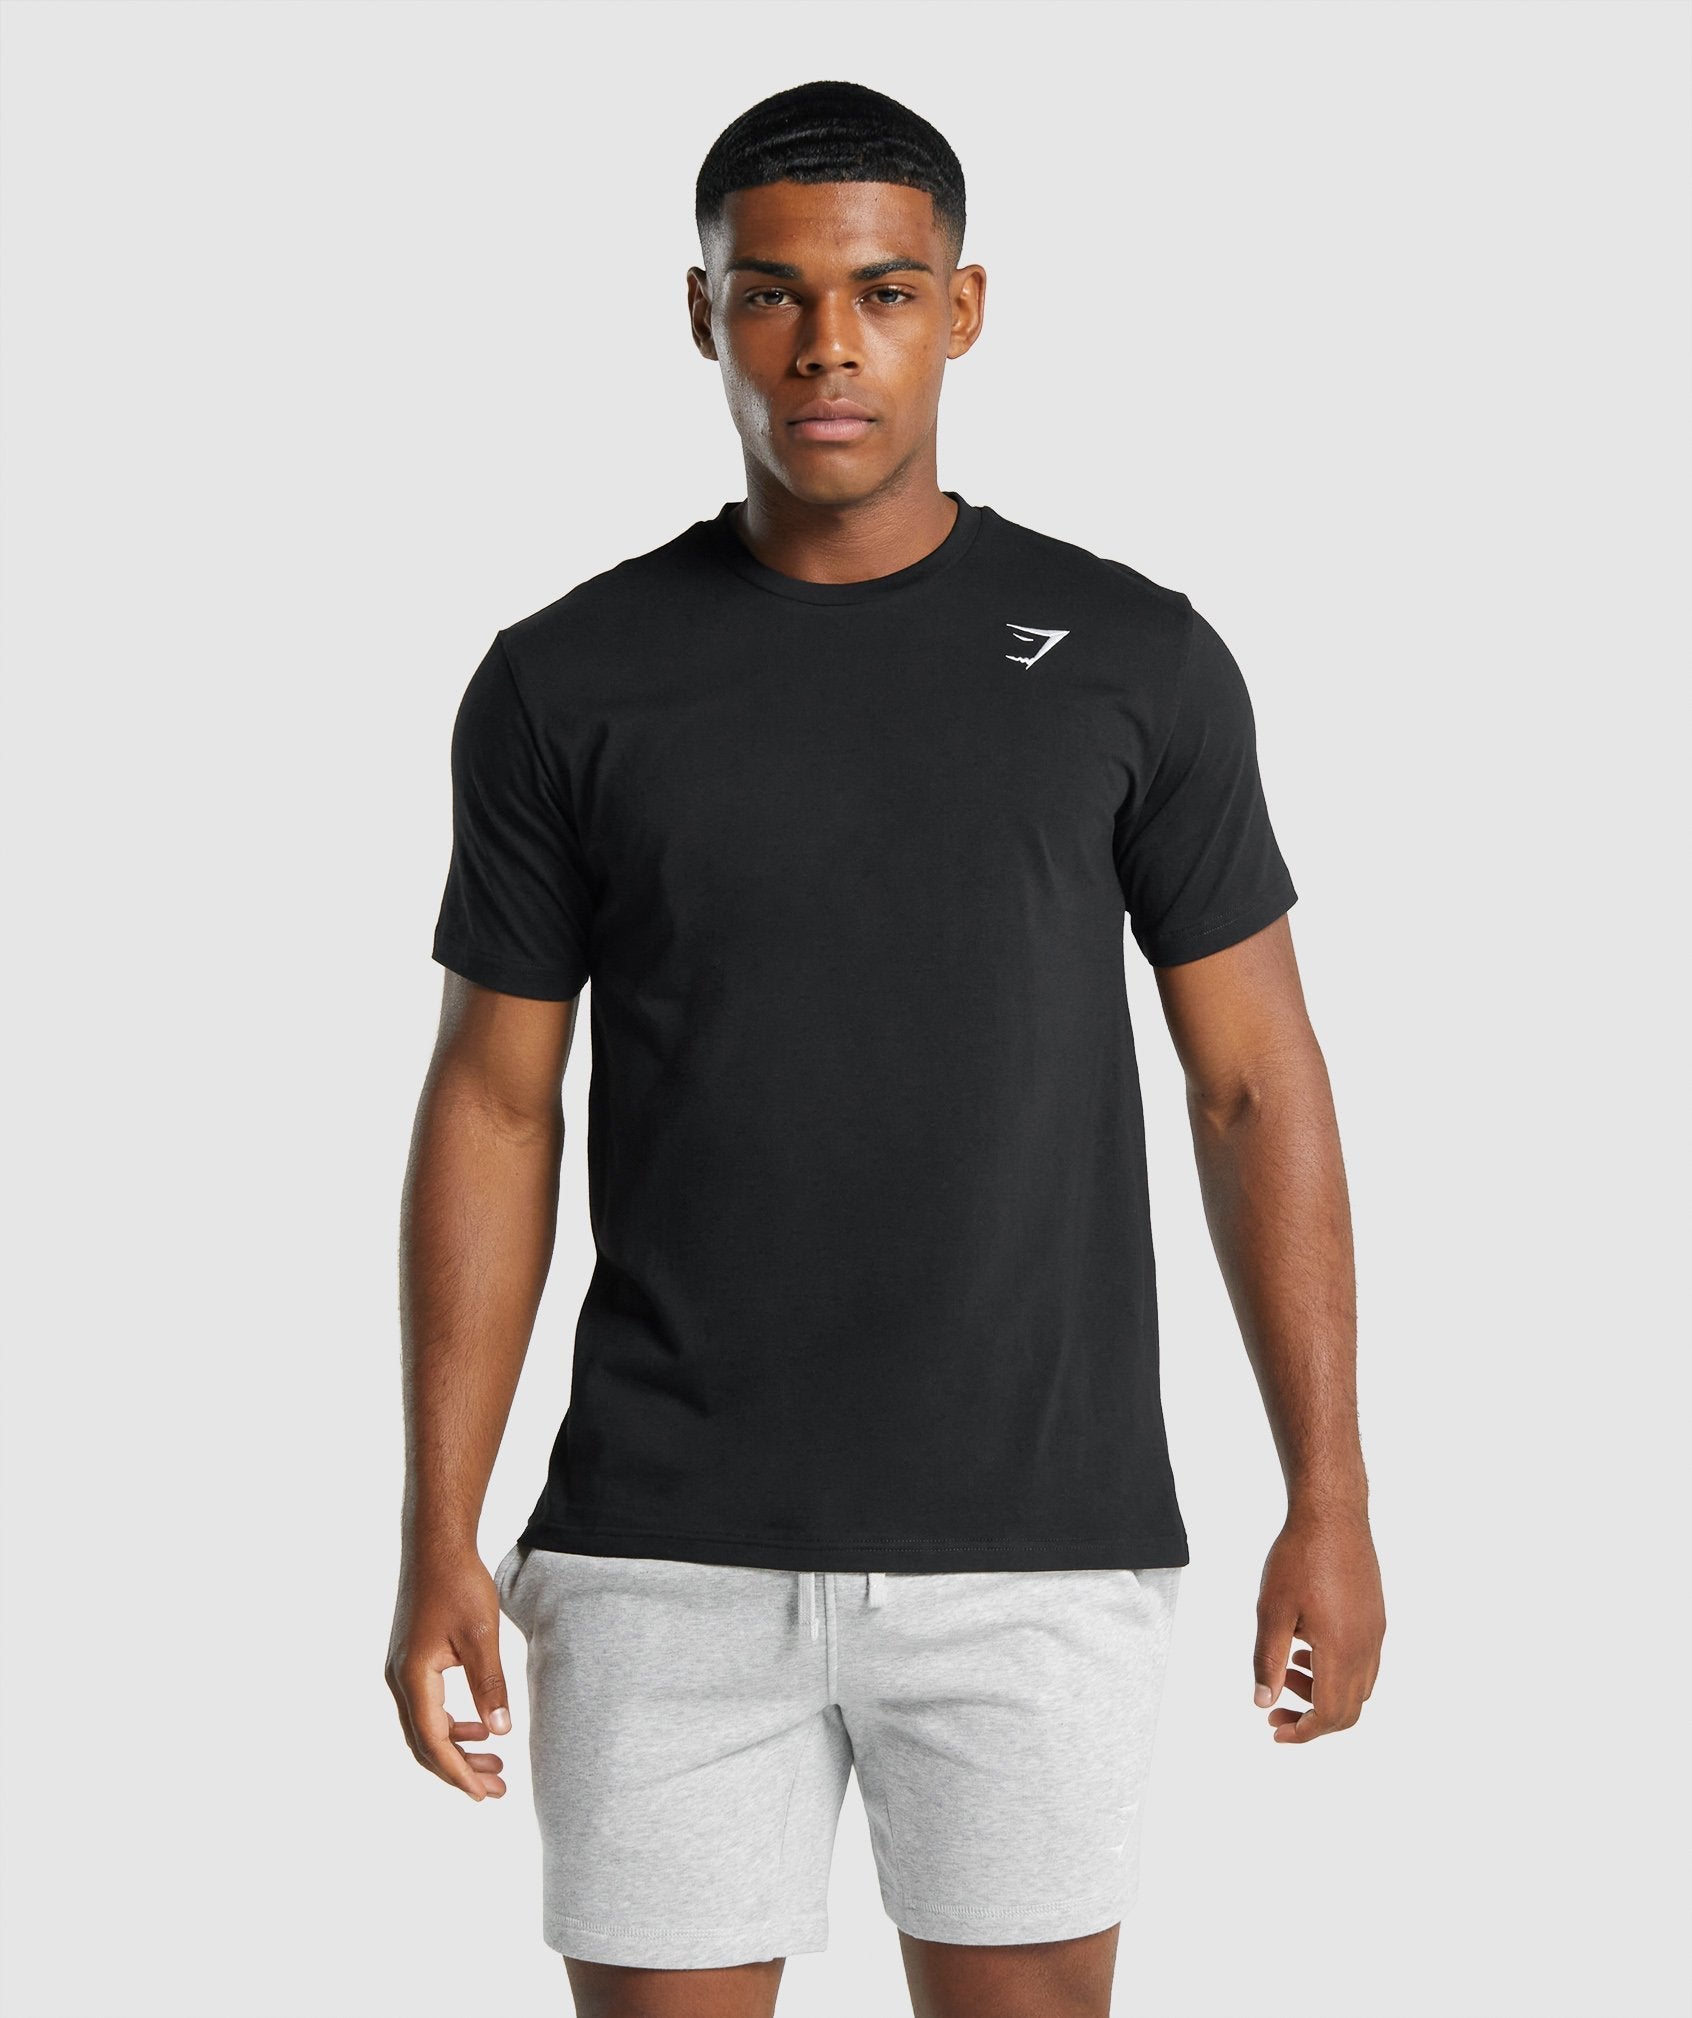 Gymshark Critical 2.0 T-Shirt - Burgundy – Client 446 100K products